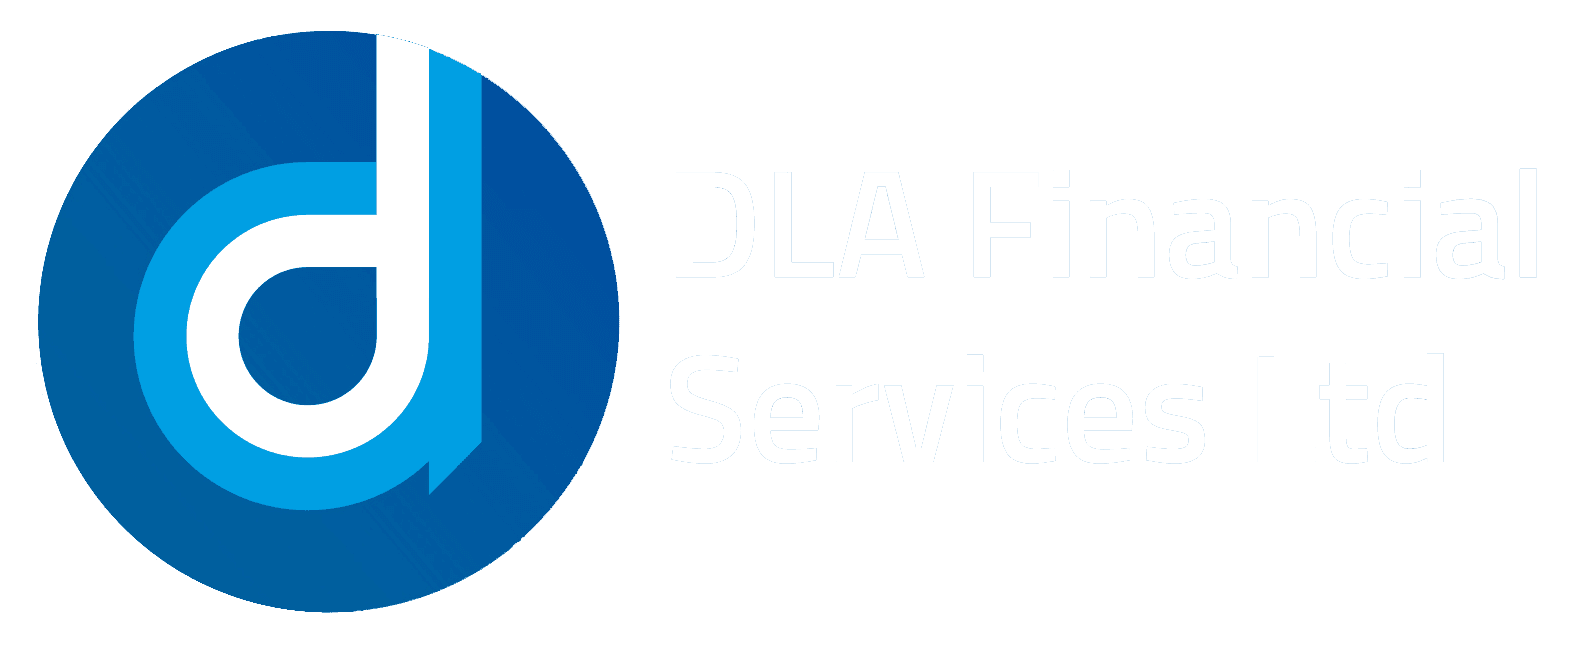 DLA Financial Services Ltd logo